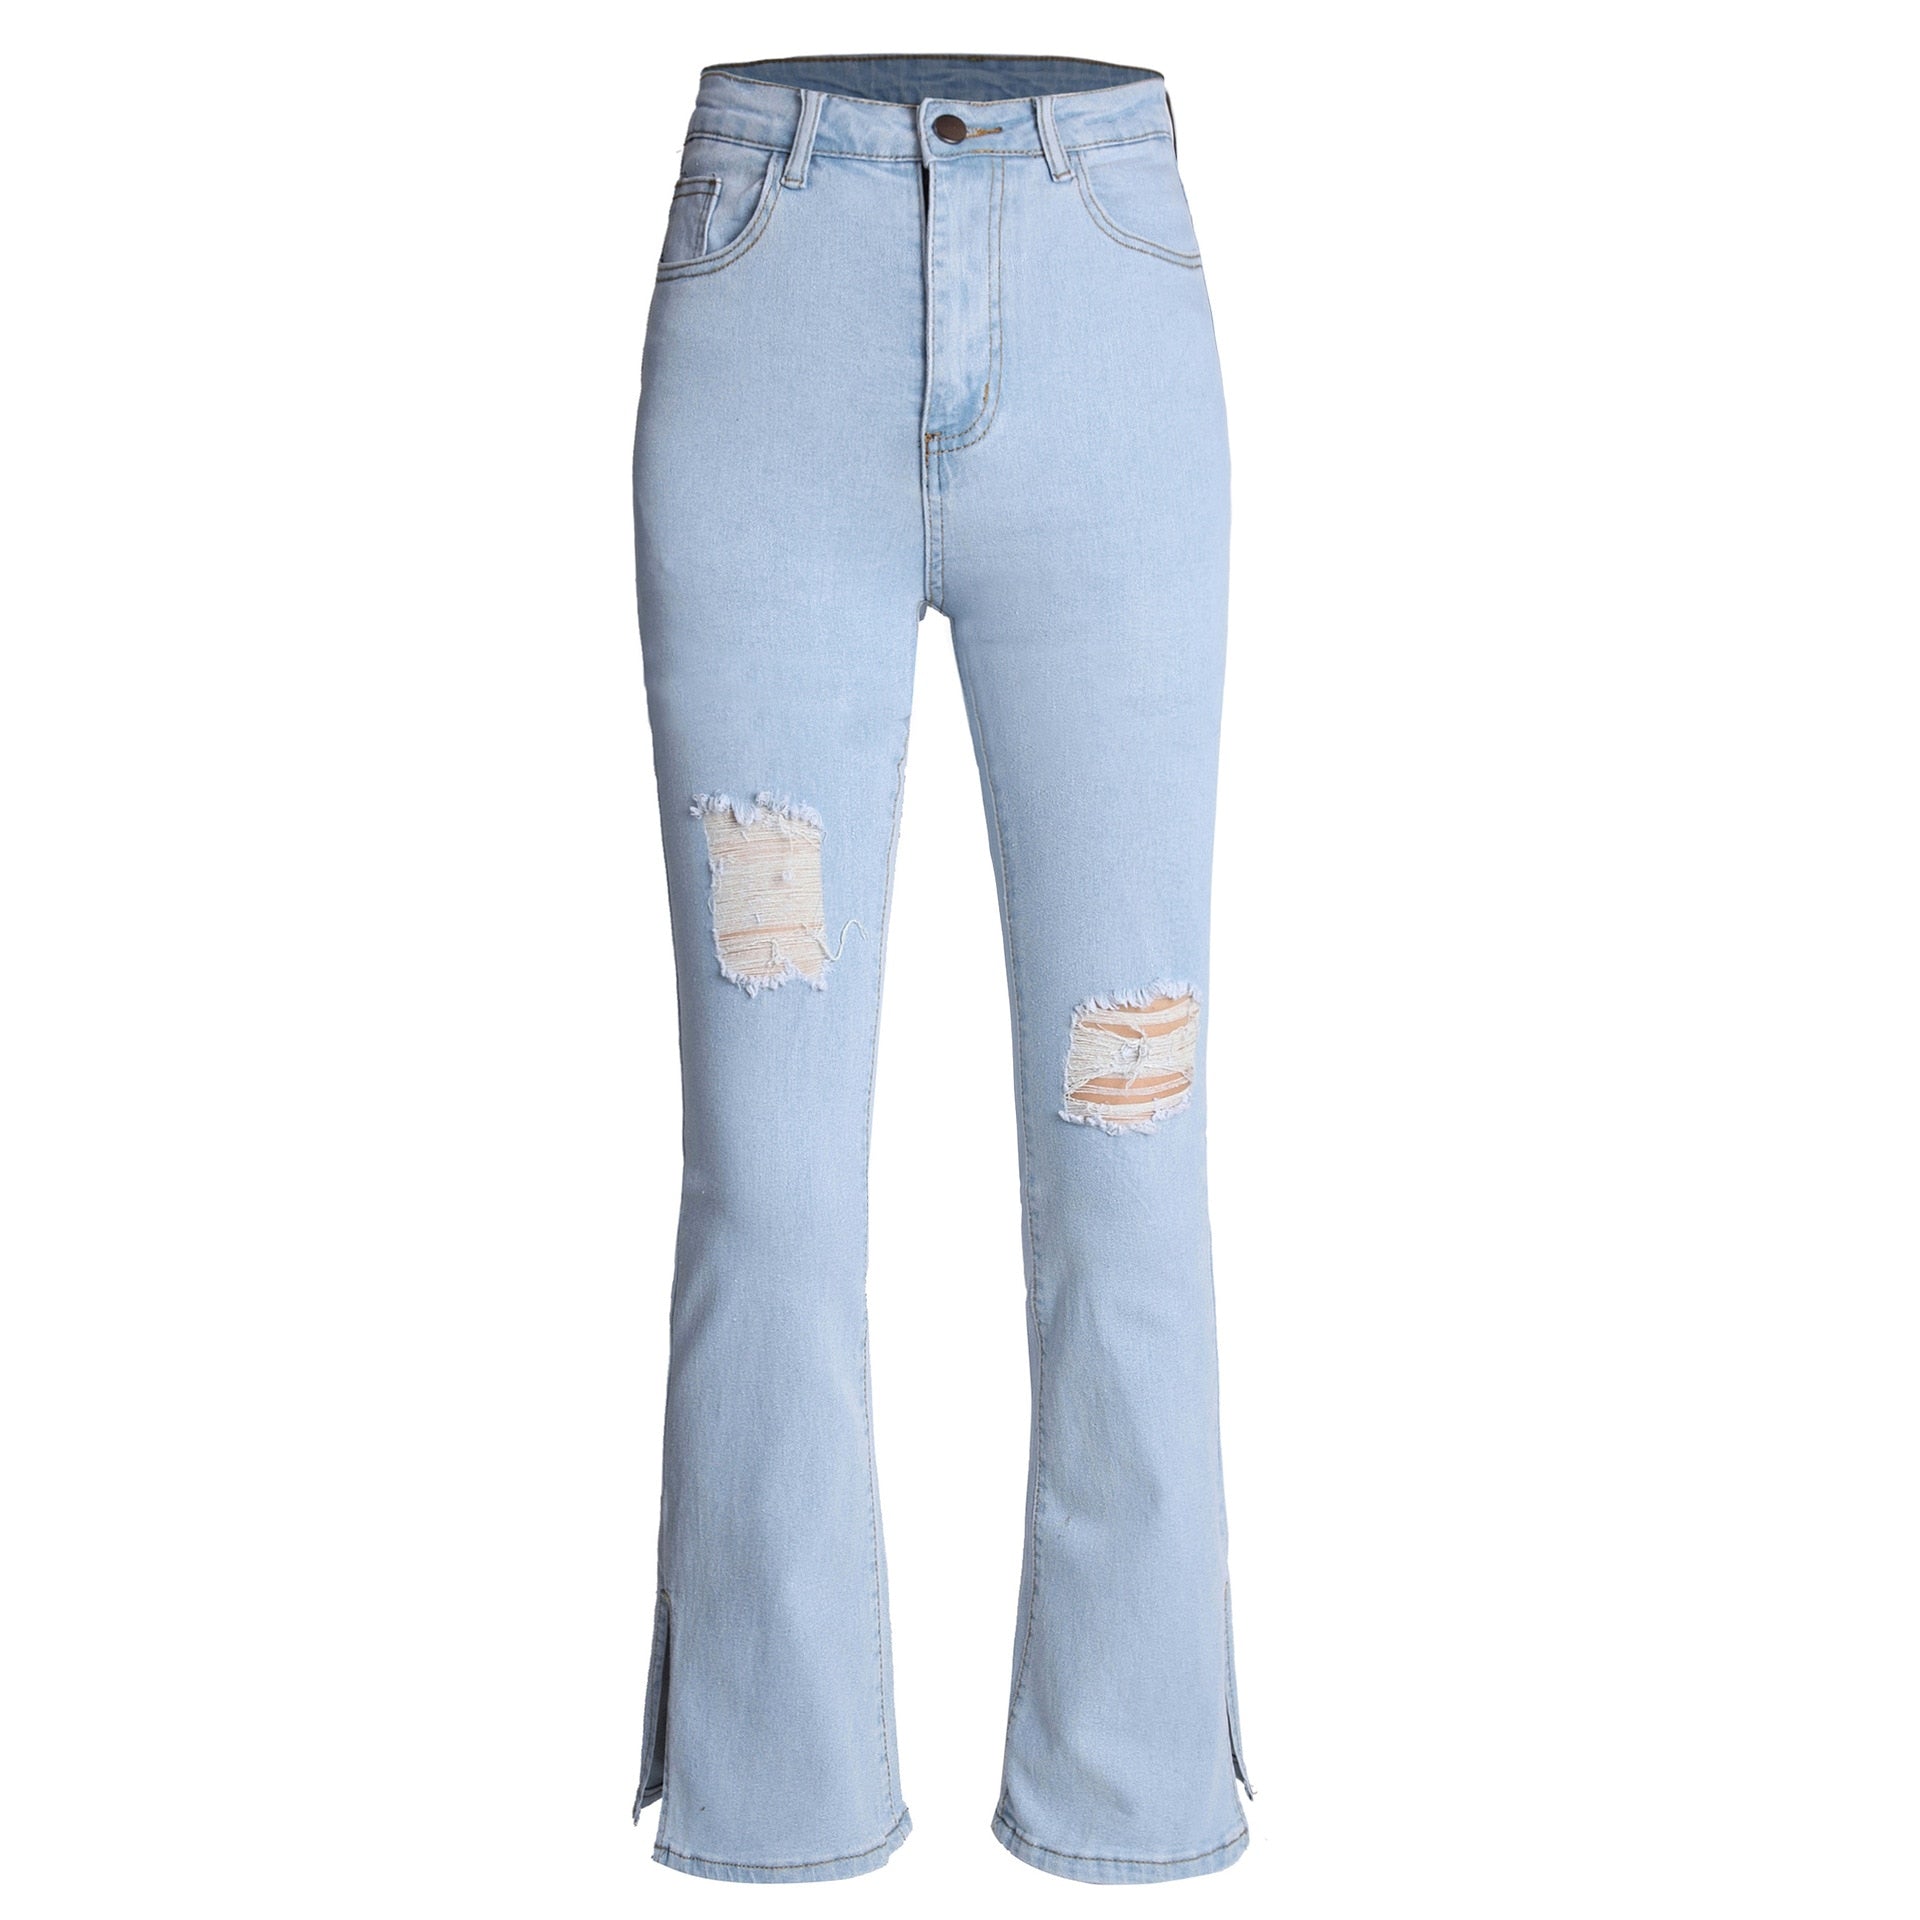 Lizakosht Sexy Ripped Jeans For Women Clothing Slid Split Flare Woman Pants Denim Full Length Middle Waist Y2k Streetwear Fashion Clothes